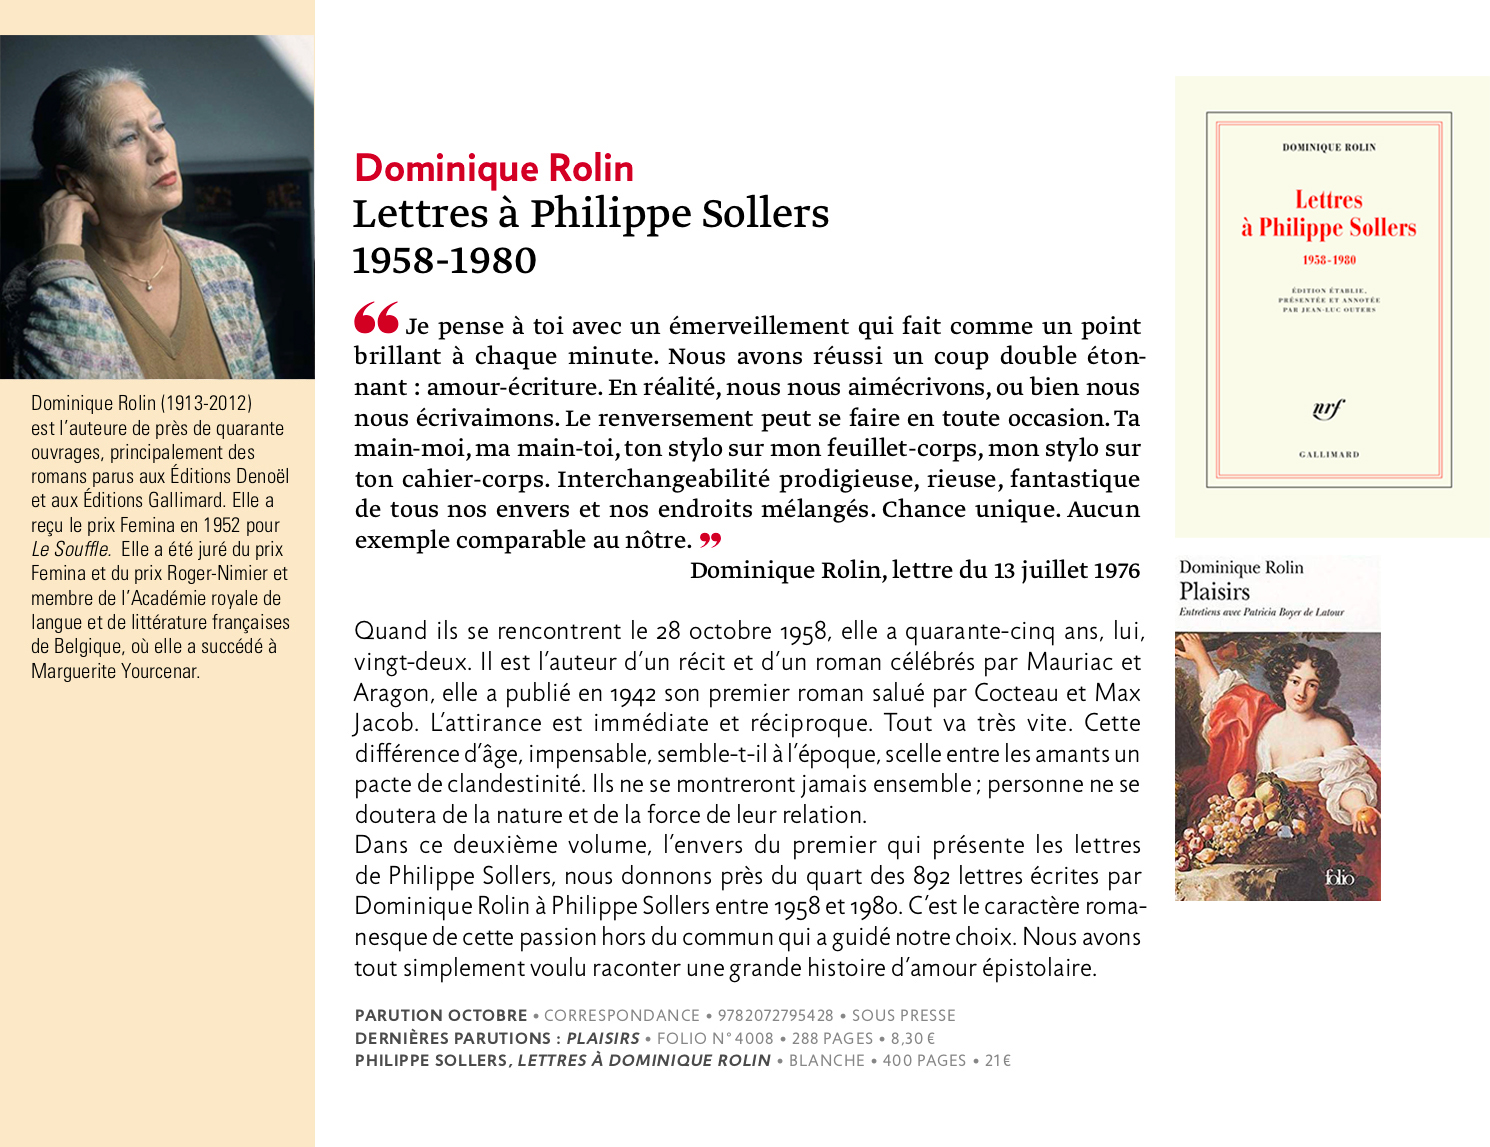 Dominique Rolin, lettres à Philippe Sollers